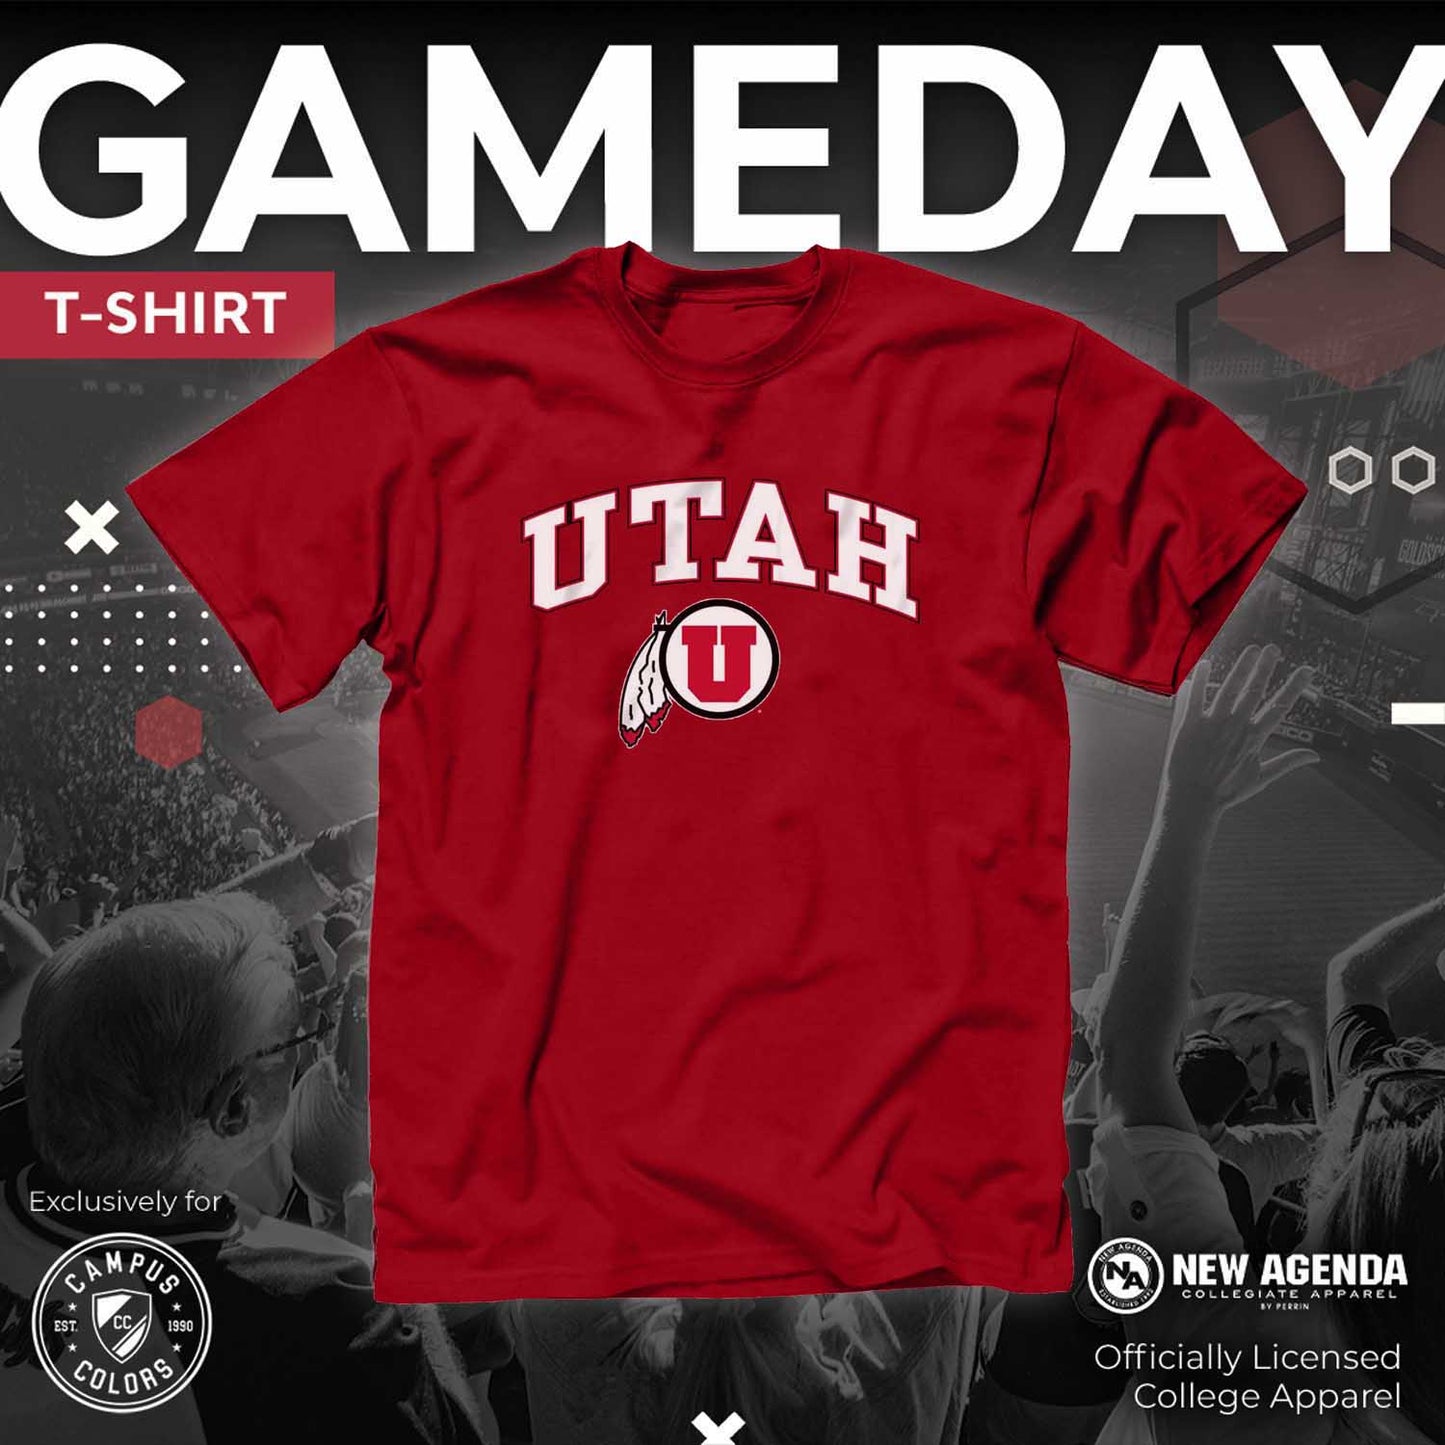 Utah Utes NCAA Adult Gameday Cotton T-Shirt - Red